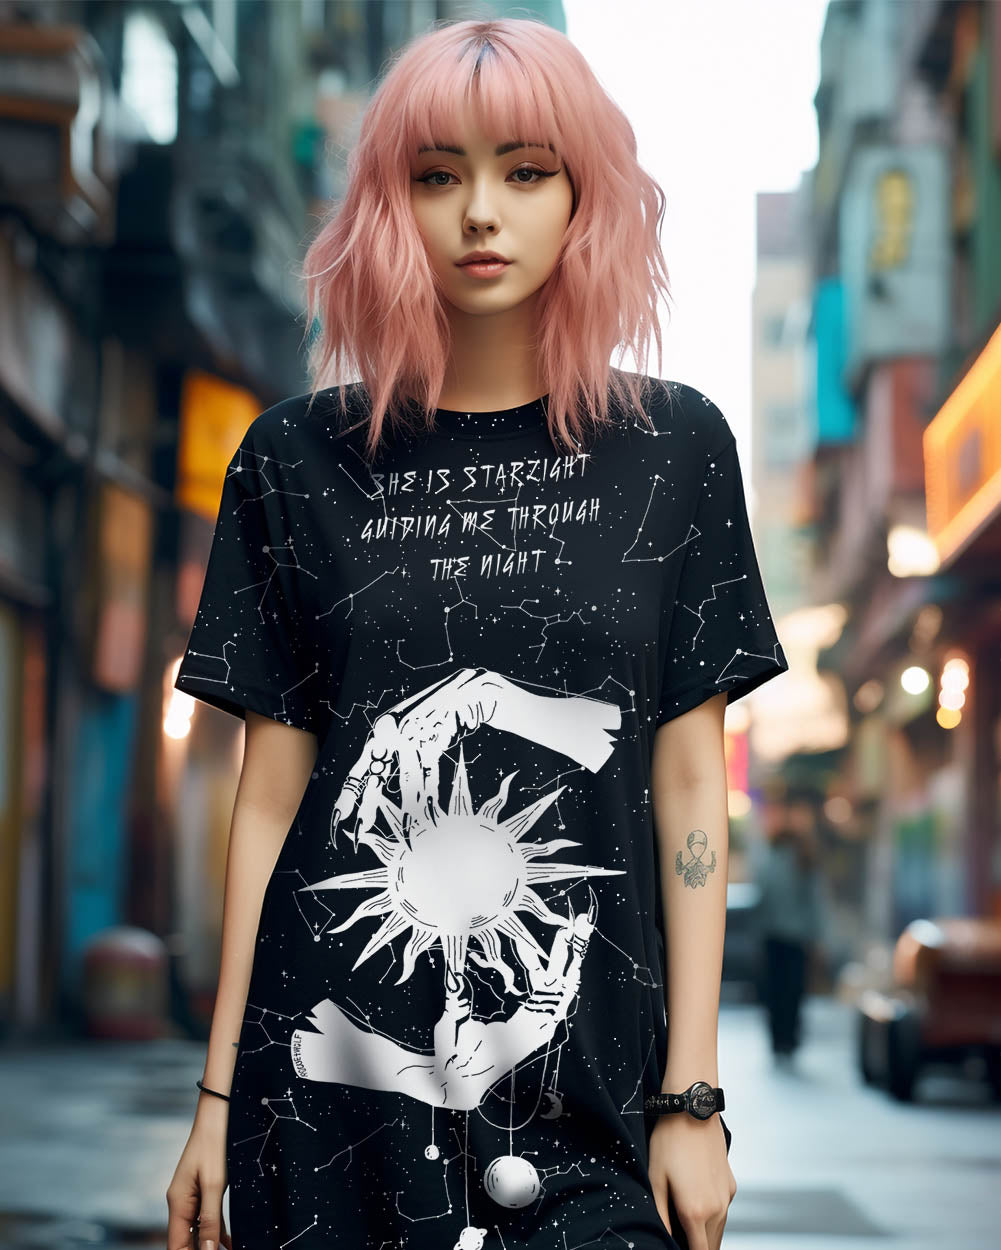 Emo-girl T-Shirts, Unique Designs